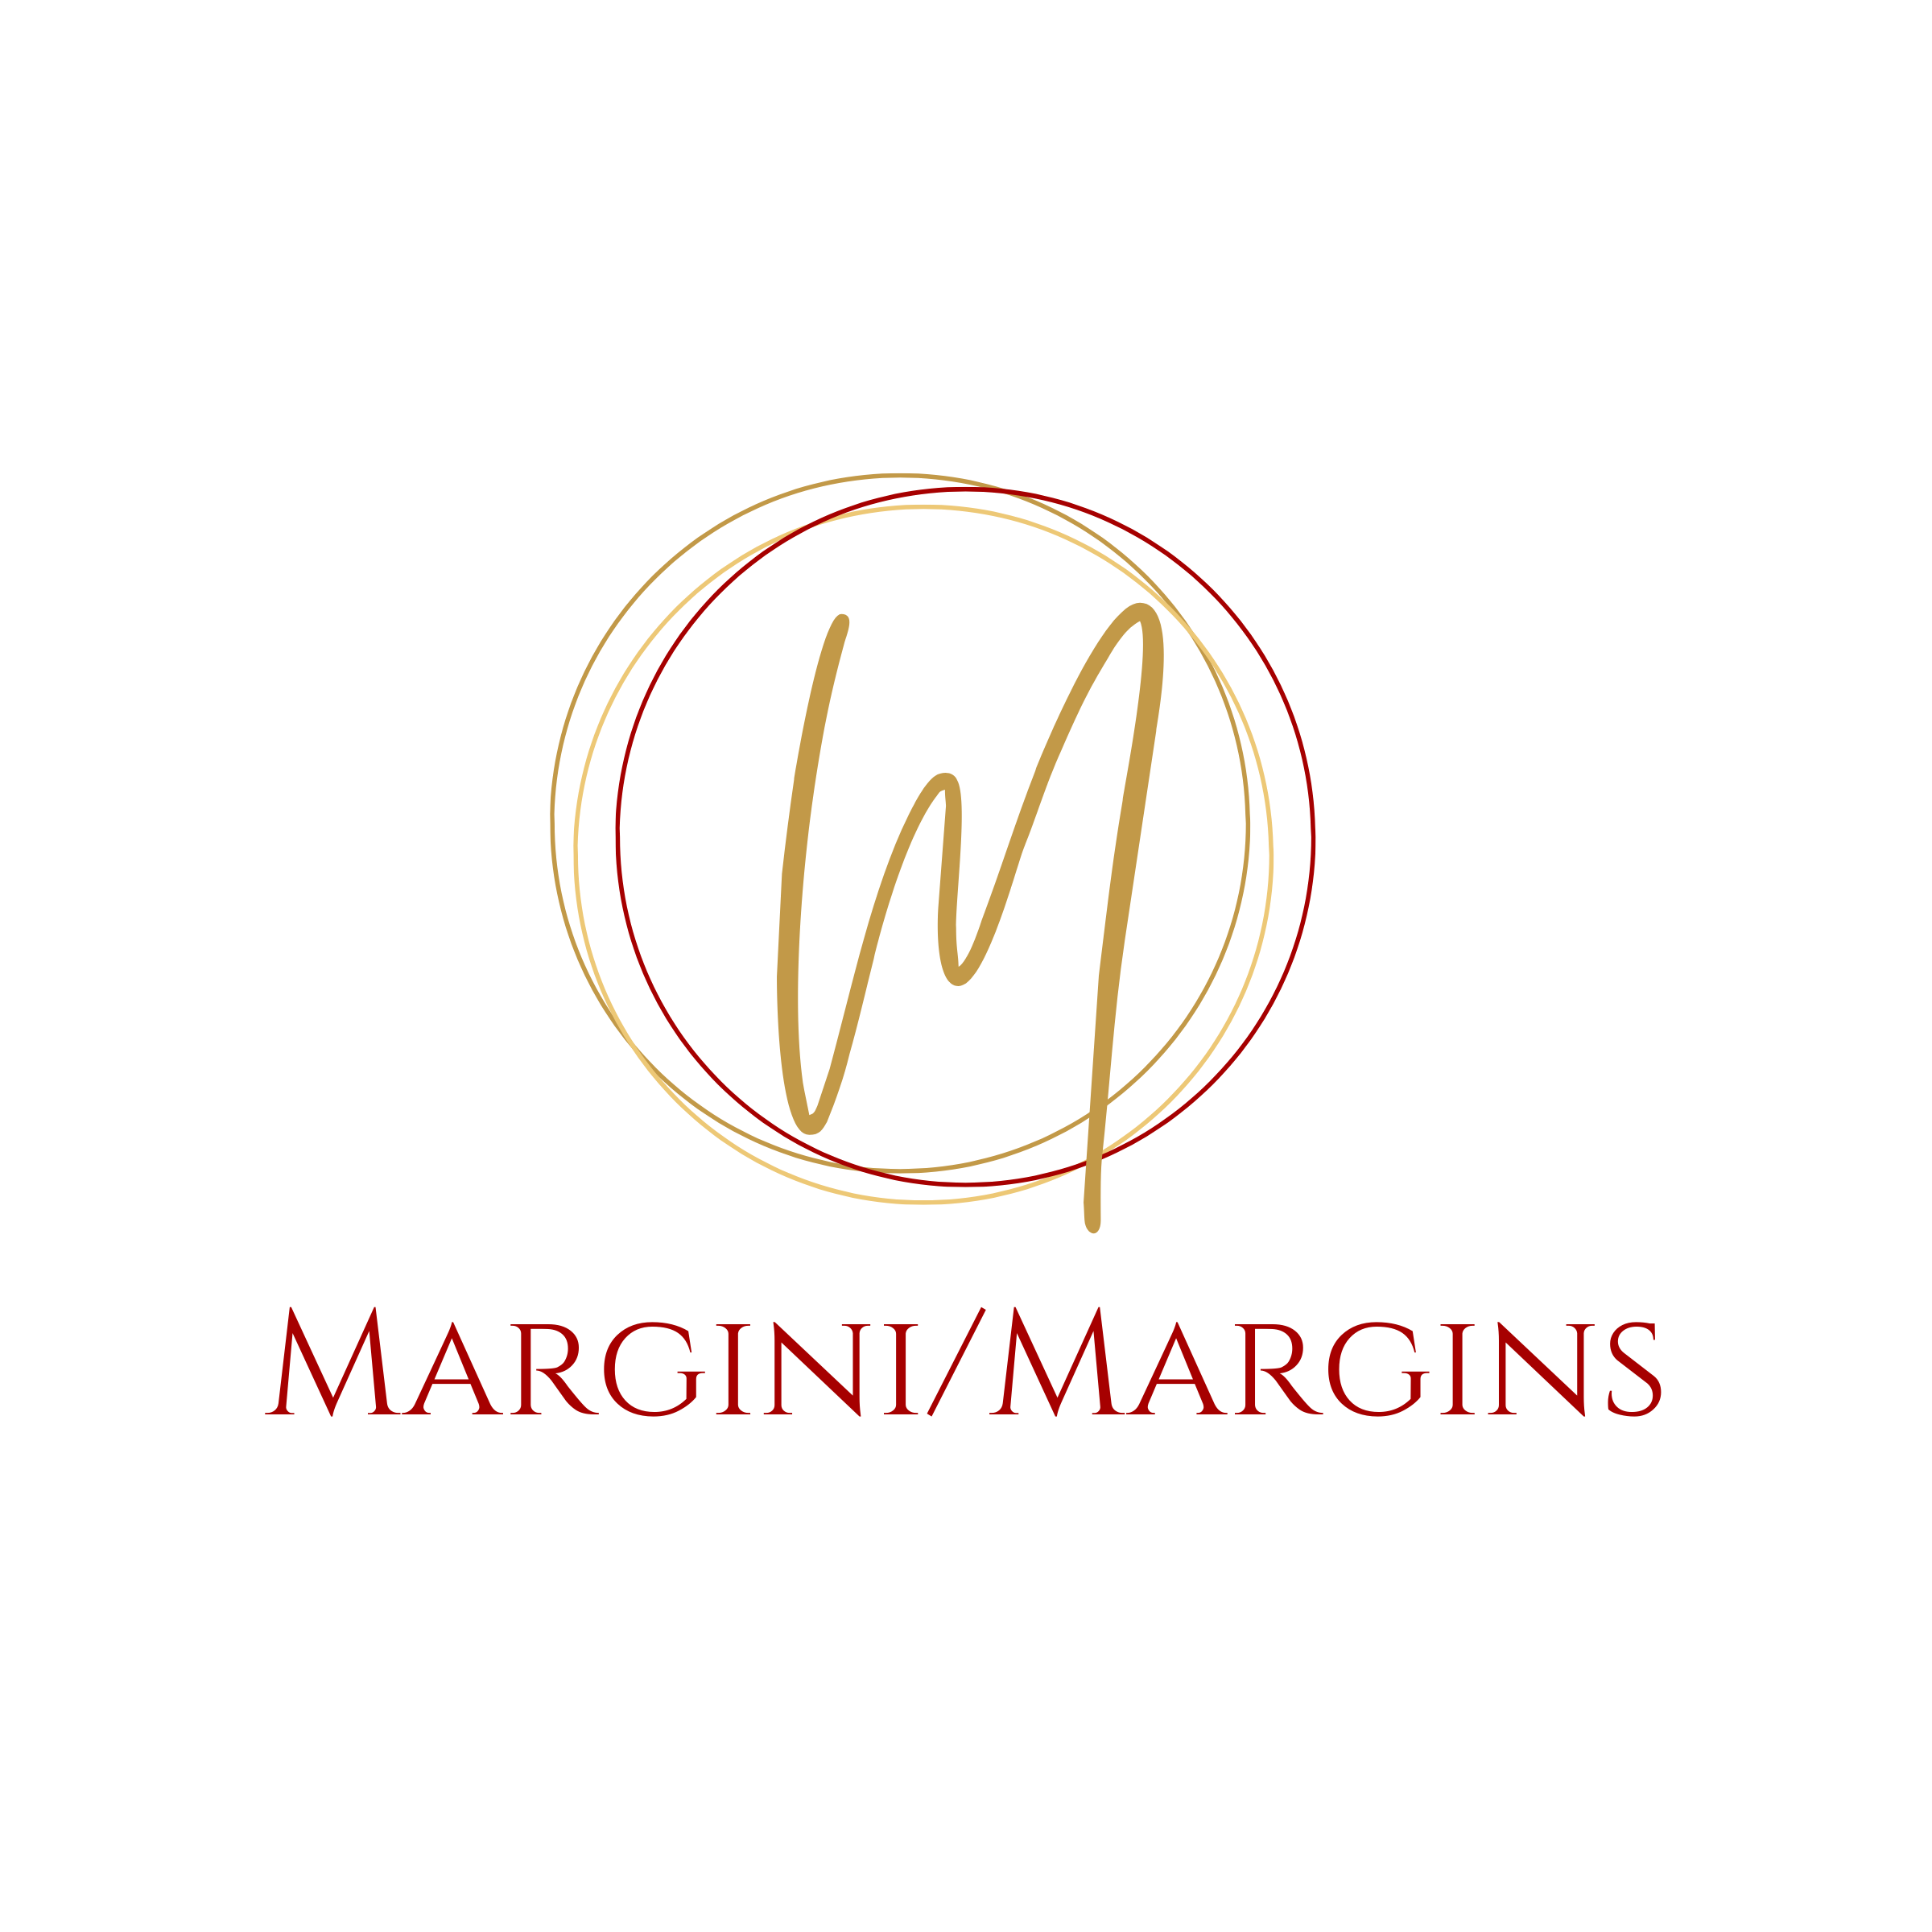 Gruppo Margini/Margins